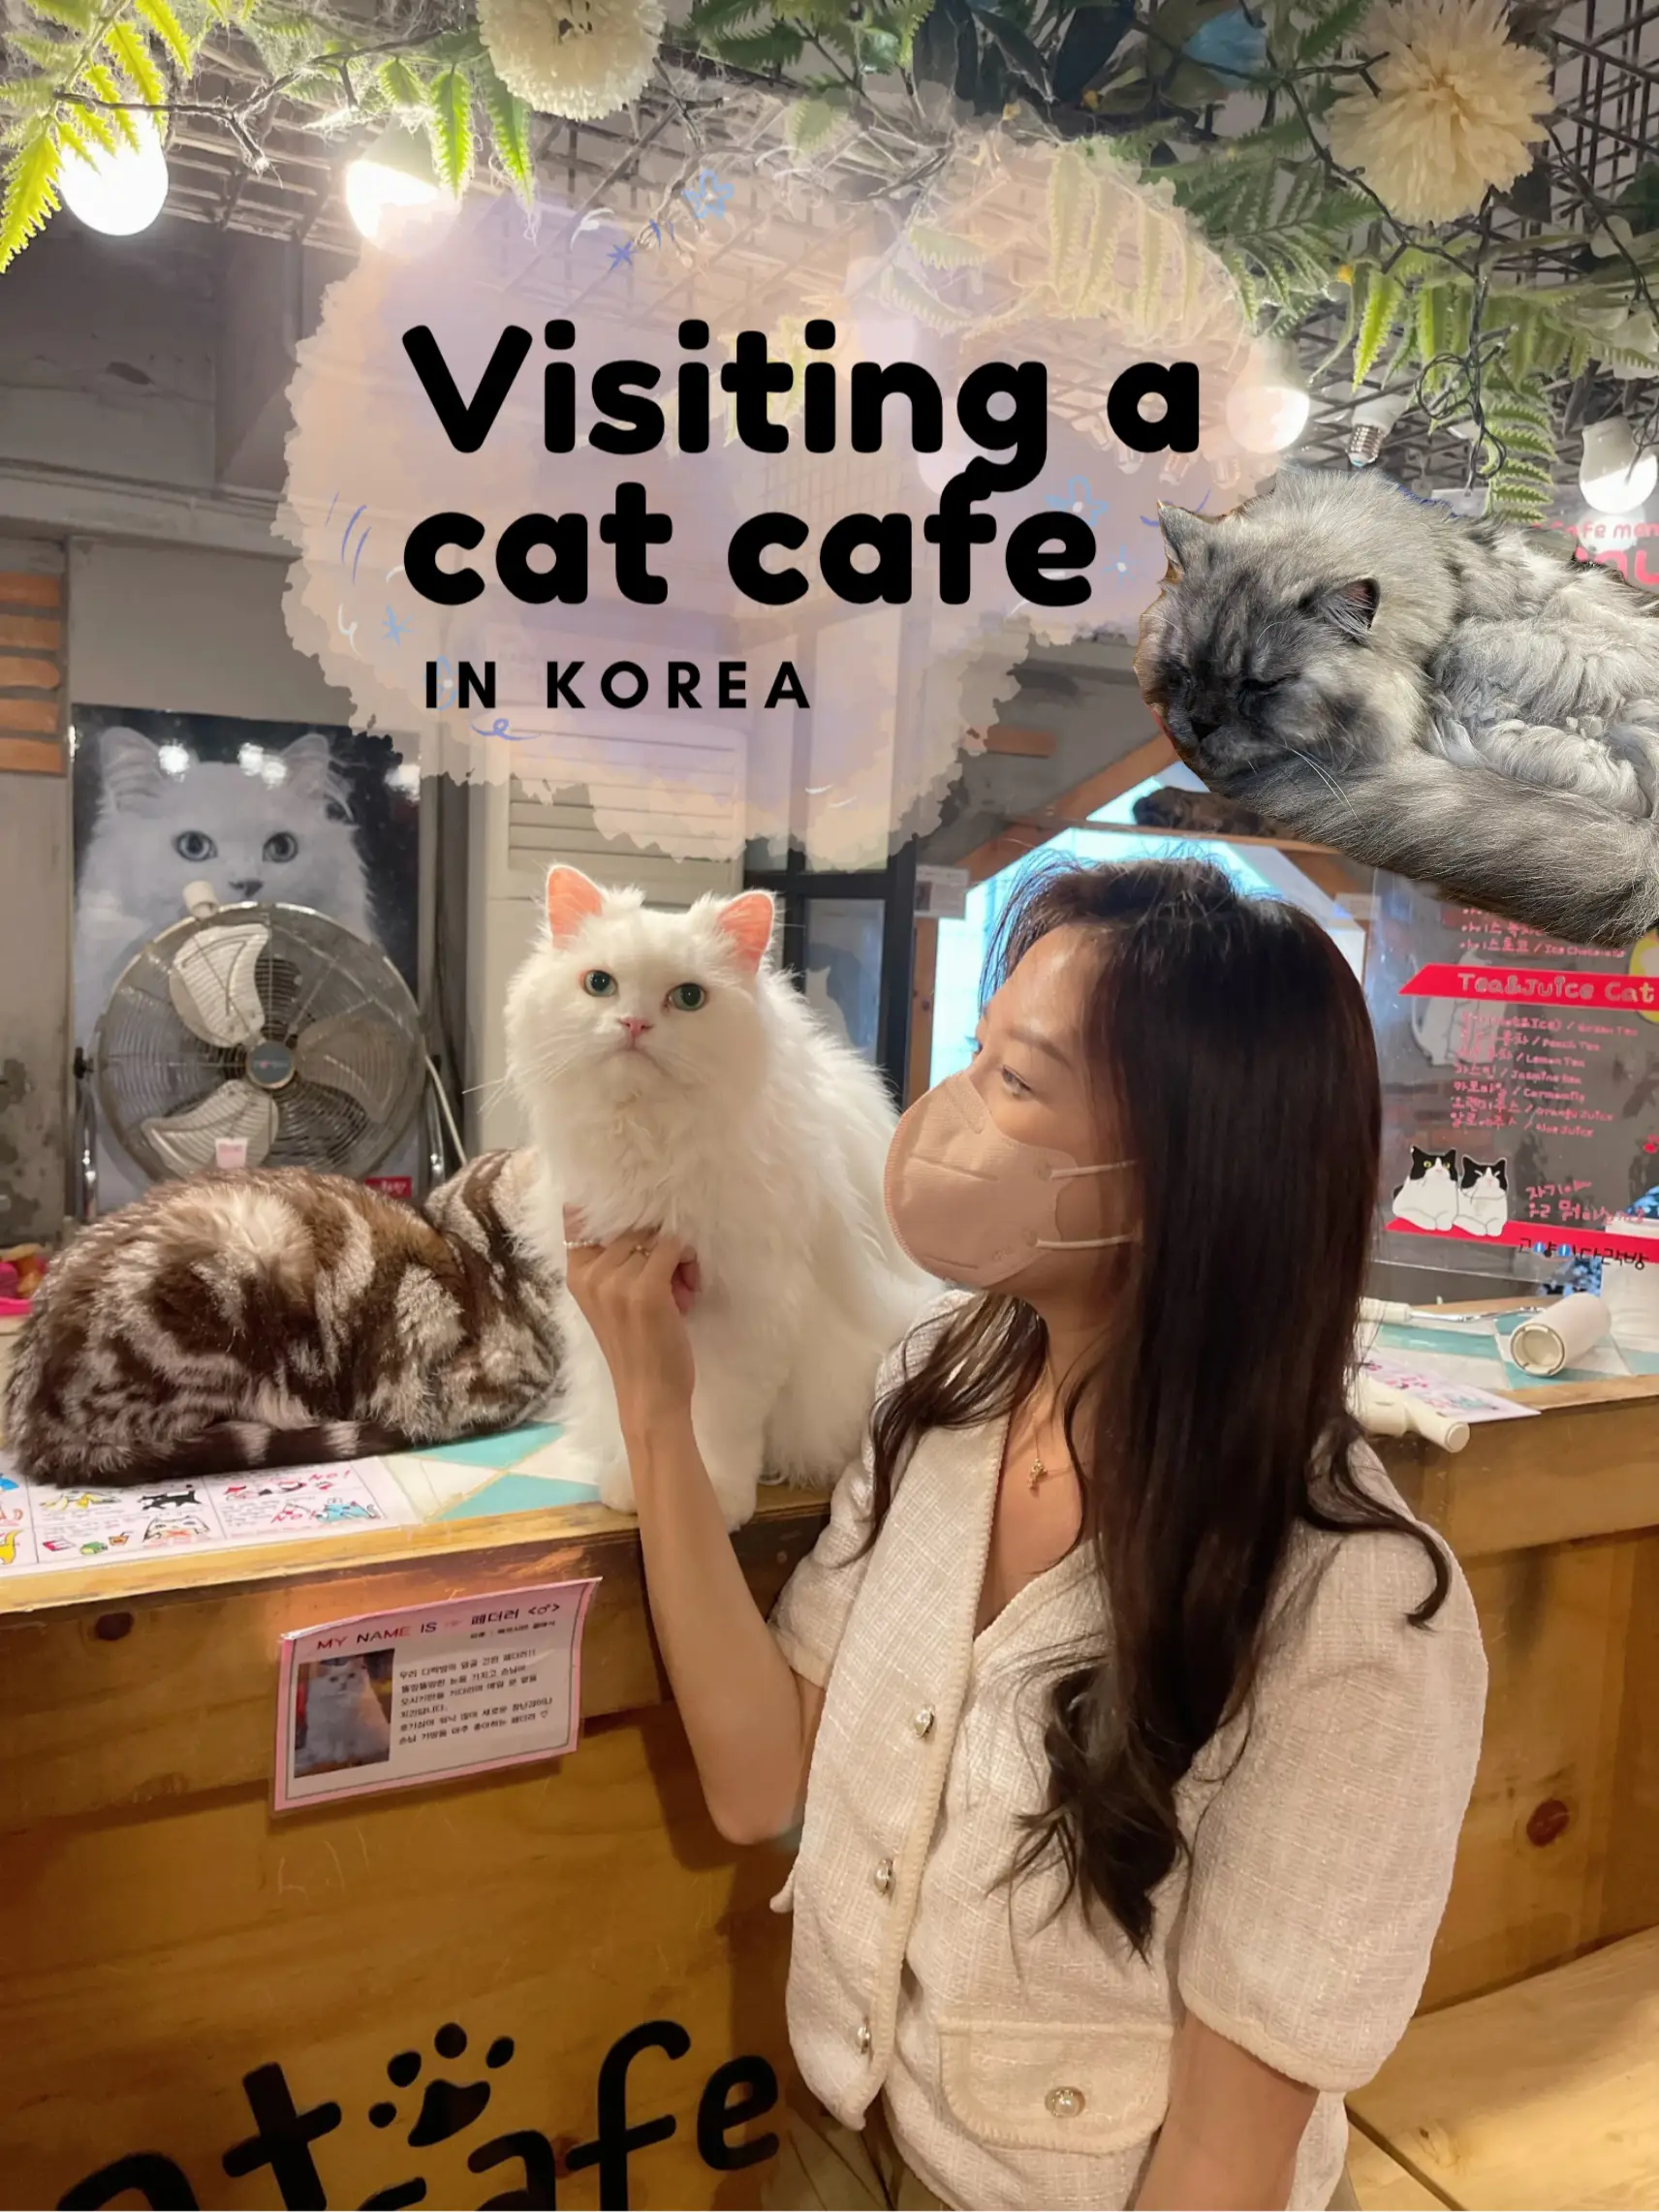 The Purr-fect Spot: Exploring Cat Cafes in Singapore